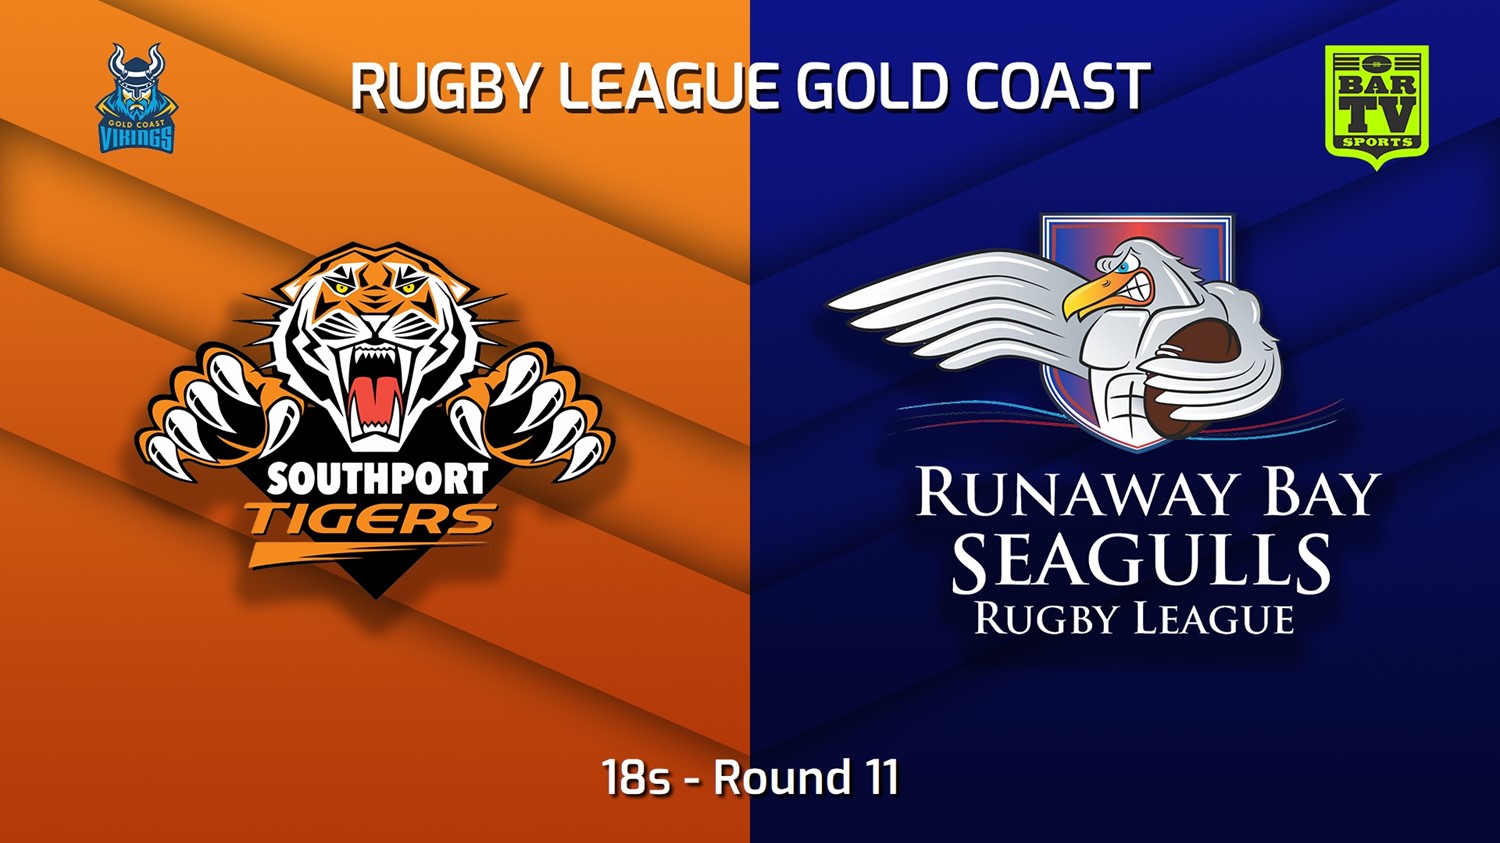 220619-Gold Coast Round 11 - 18s - Southport Tigers v Runaway Bay Seagulls Slate Image